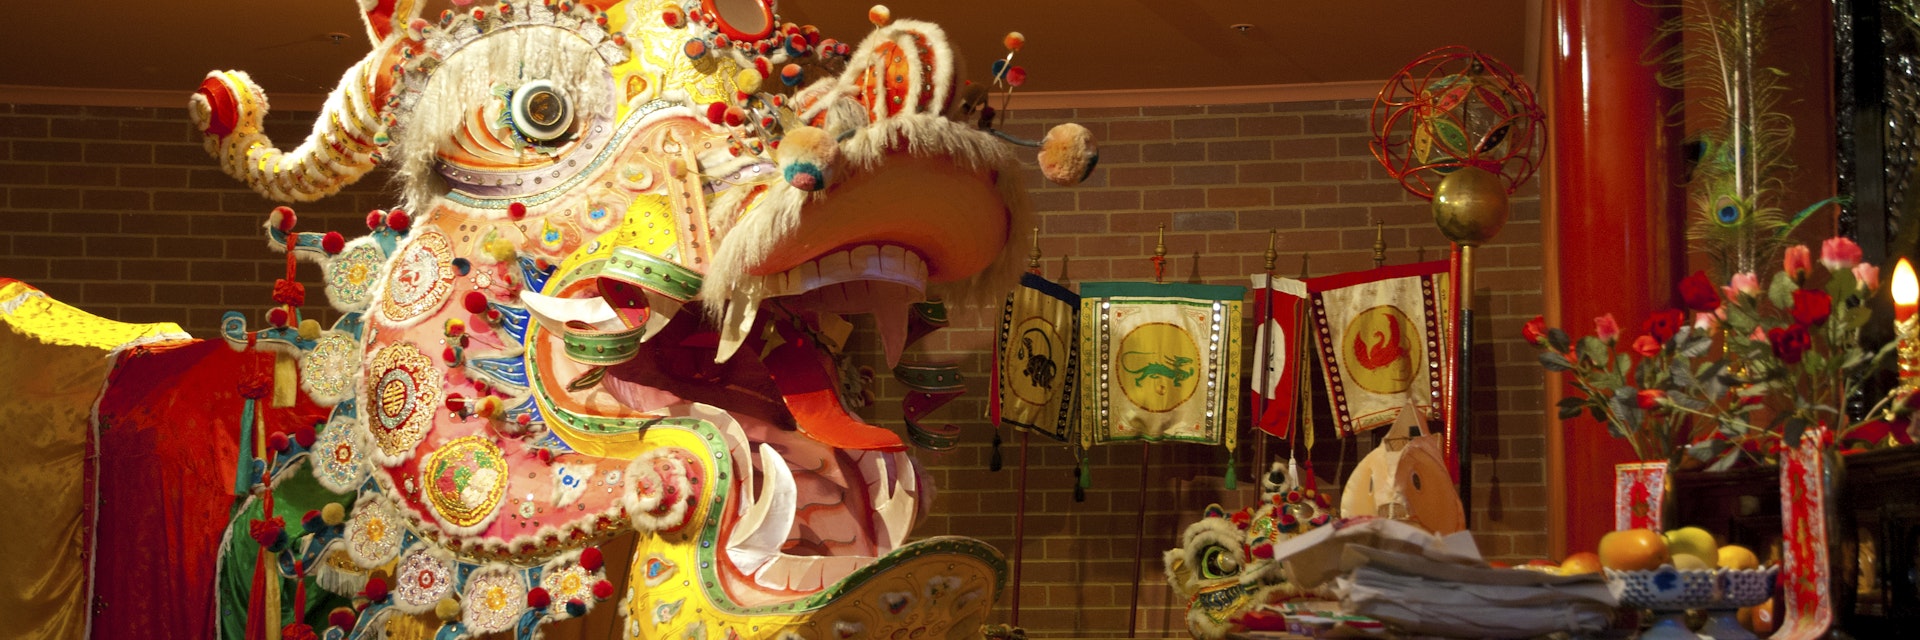 Ceremonial dragon in Golden Dragon Museum.